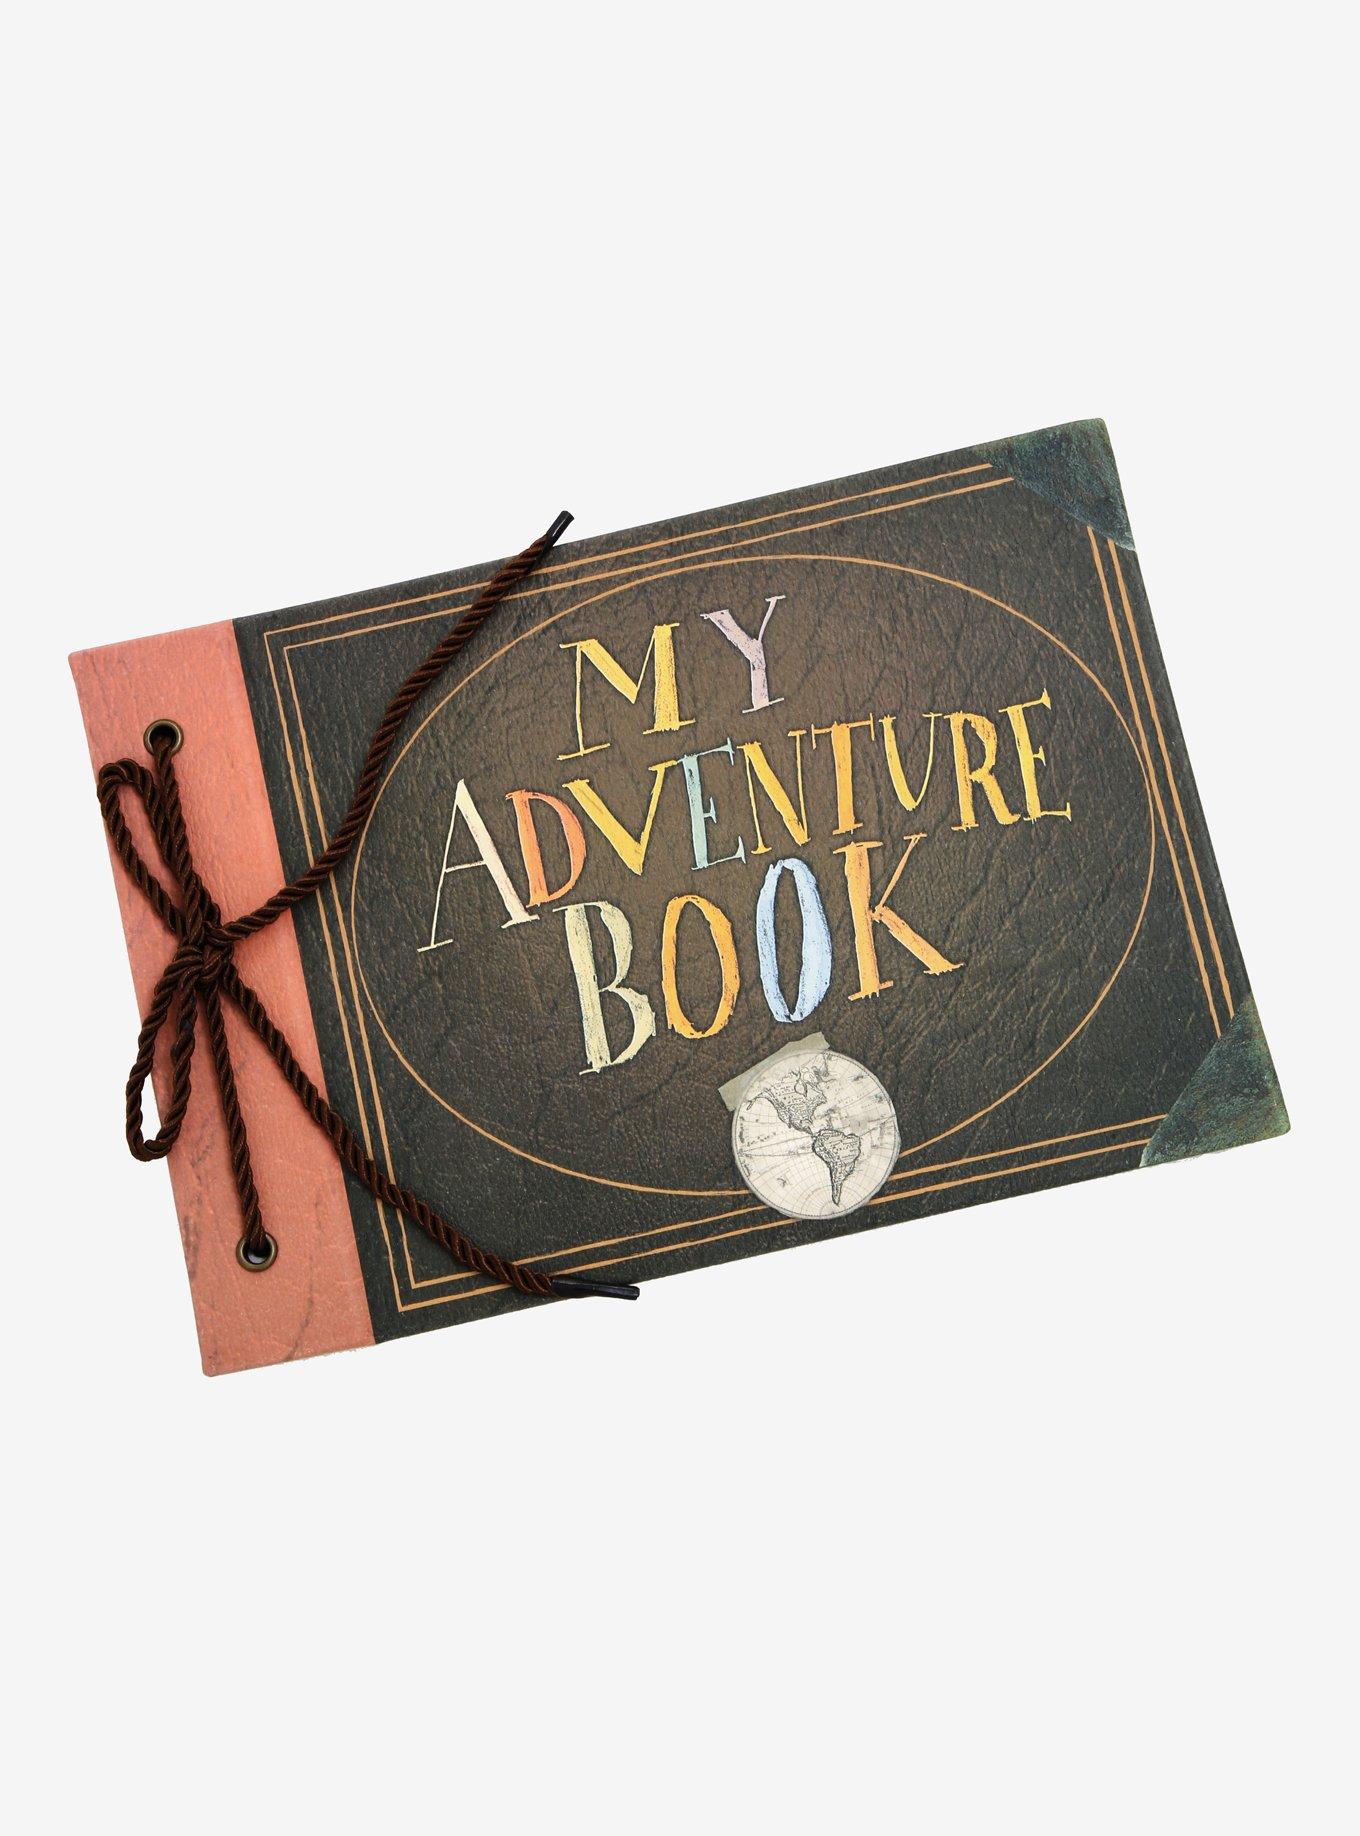 Disney Pixar Up Adventure Book Journal - BoxLunch Exclusive, BoxLunch